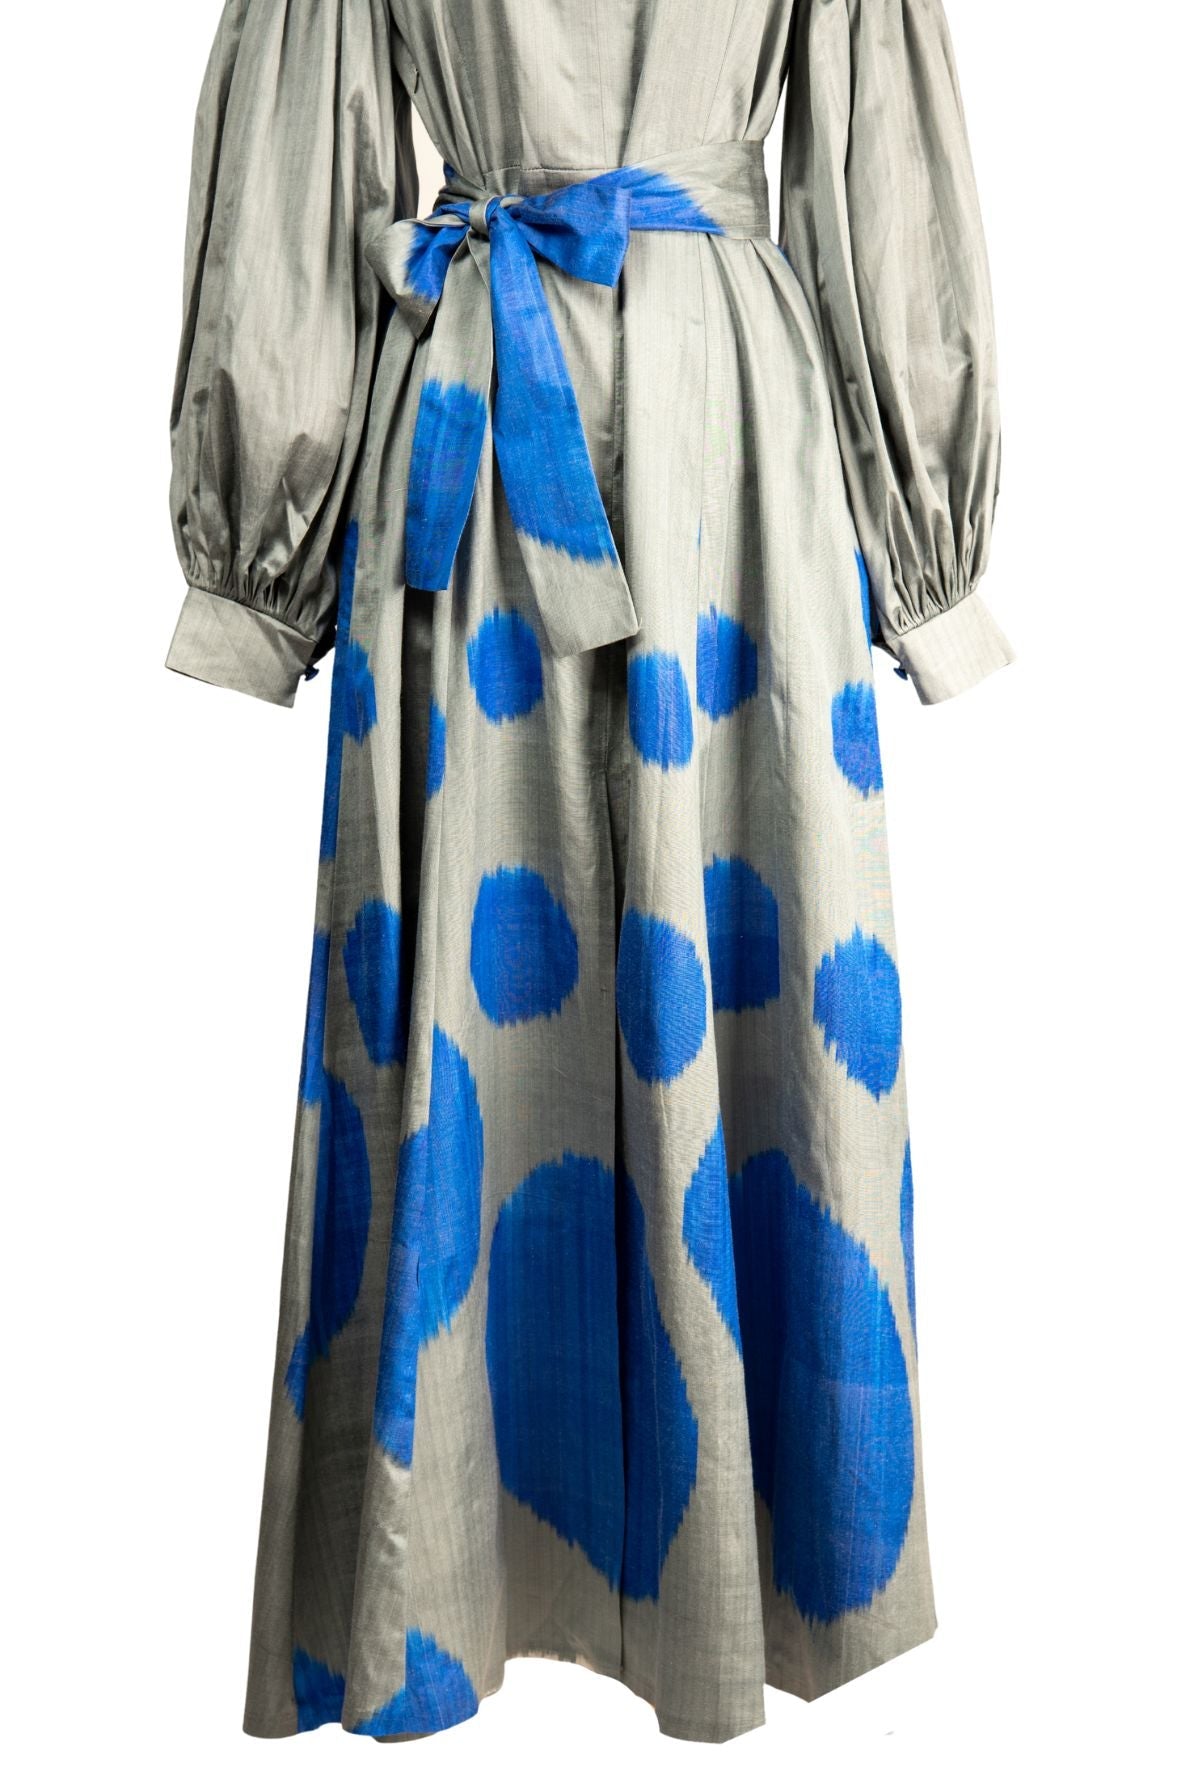 Serena Silk Ikat Dress - Grey, Cobalt Blue by Larkin Lane